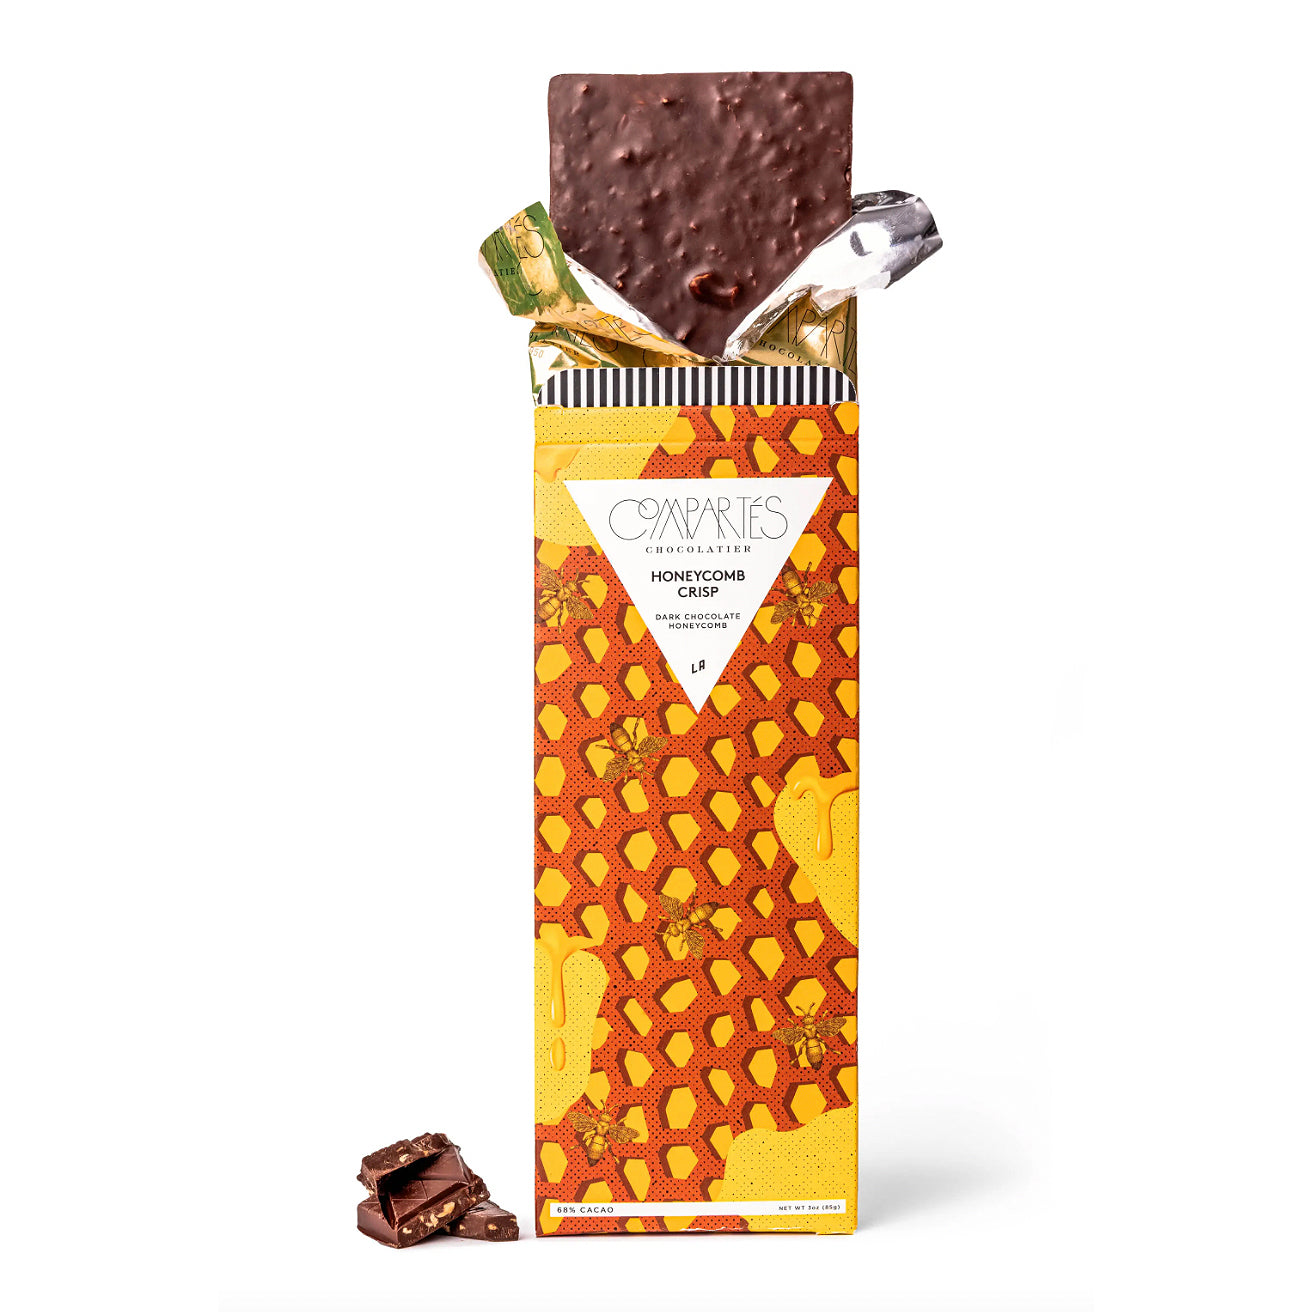 Compartes Honeycomb Crisp Gourmet Dark Chocolate | Prelude & Dawn | Los Angeles, CA